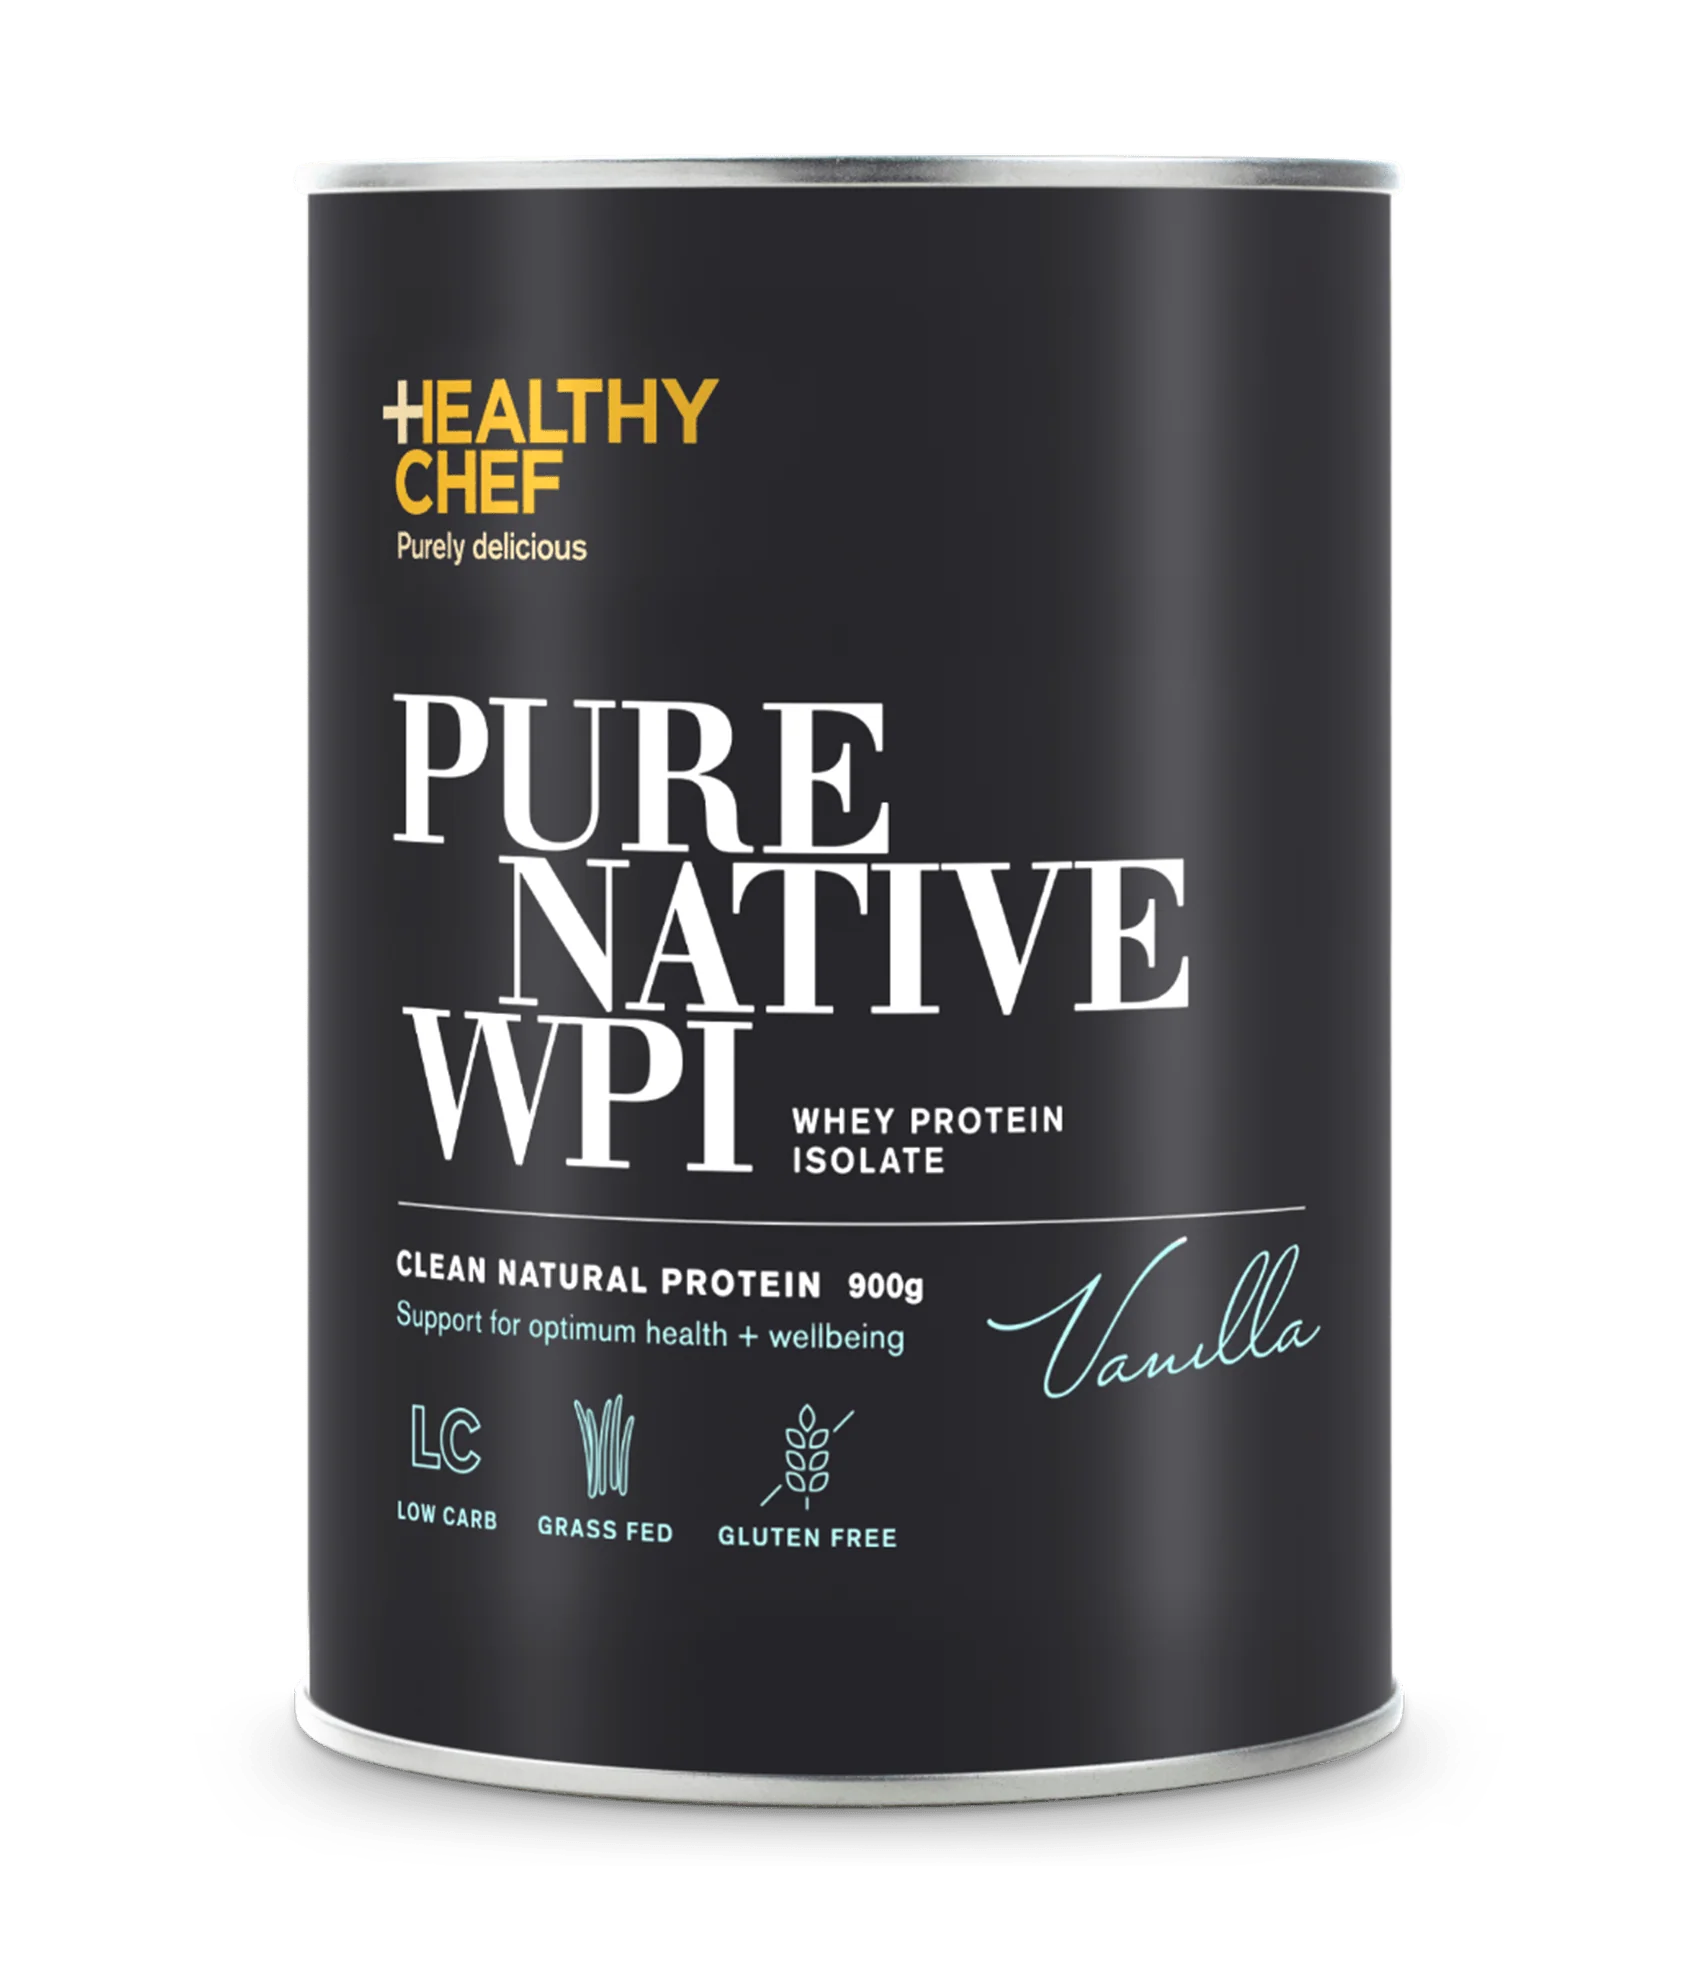 The Healthy Chef Pure Native WPI (Whey Protein Isolate) Vanilla